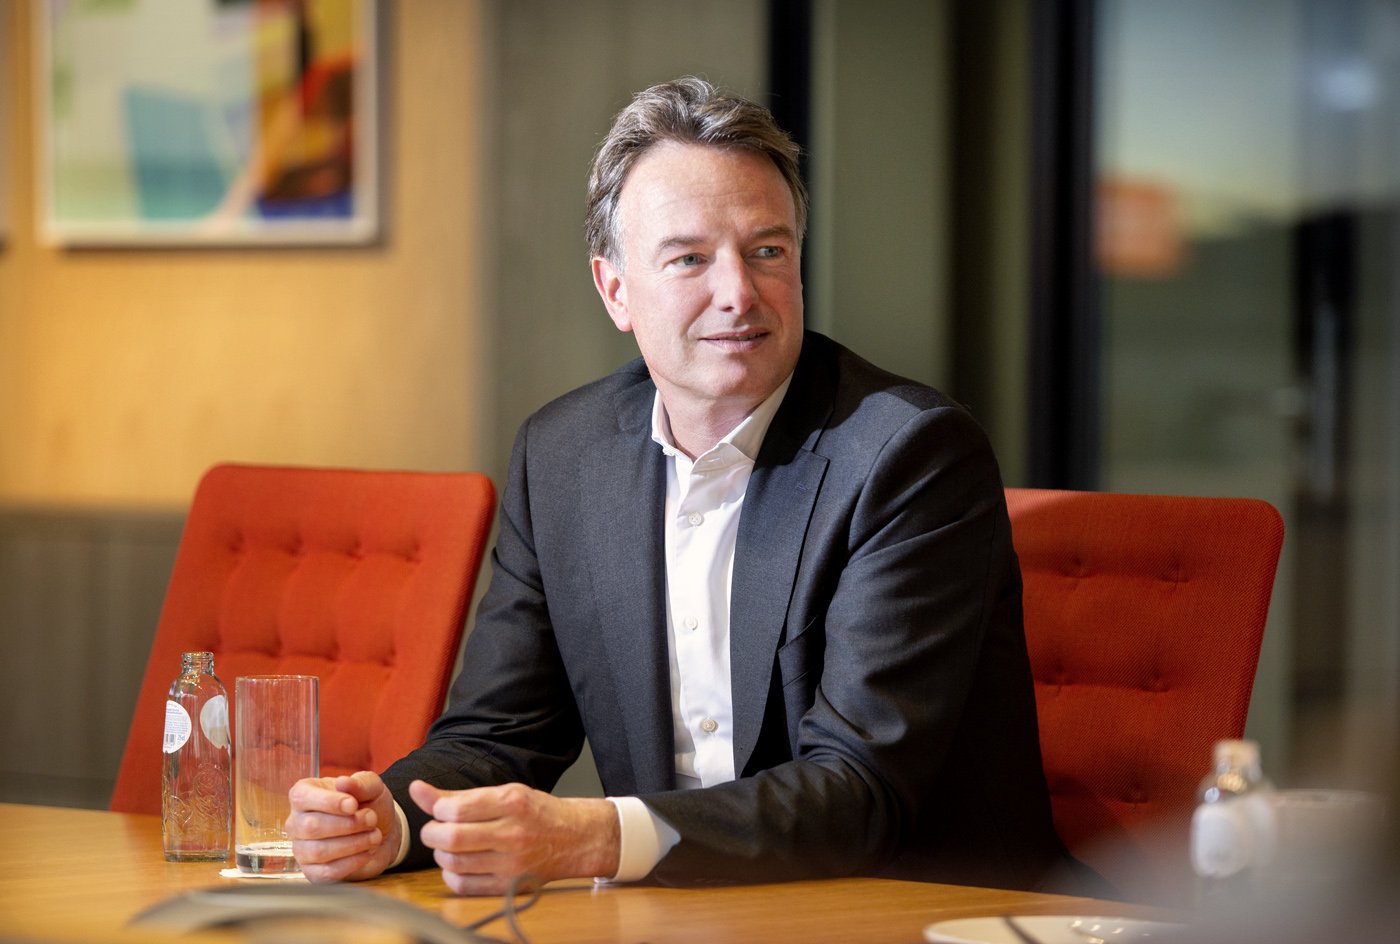   Steven van Rijswijk |  CEO, Member Executive Board ING Group.  